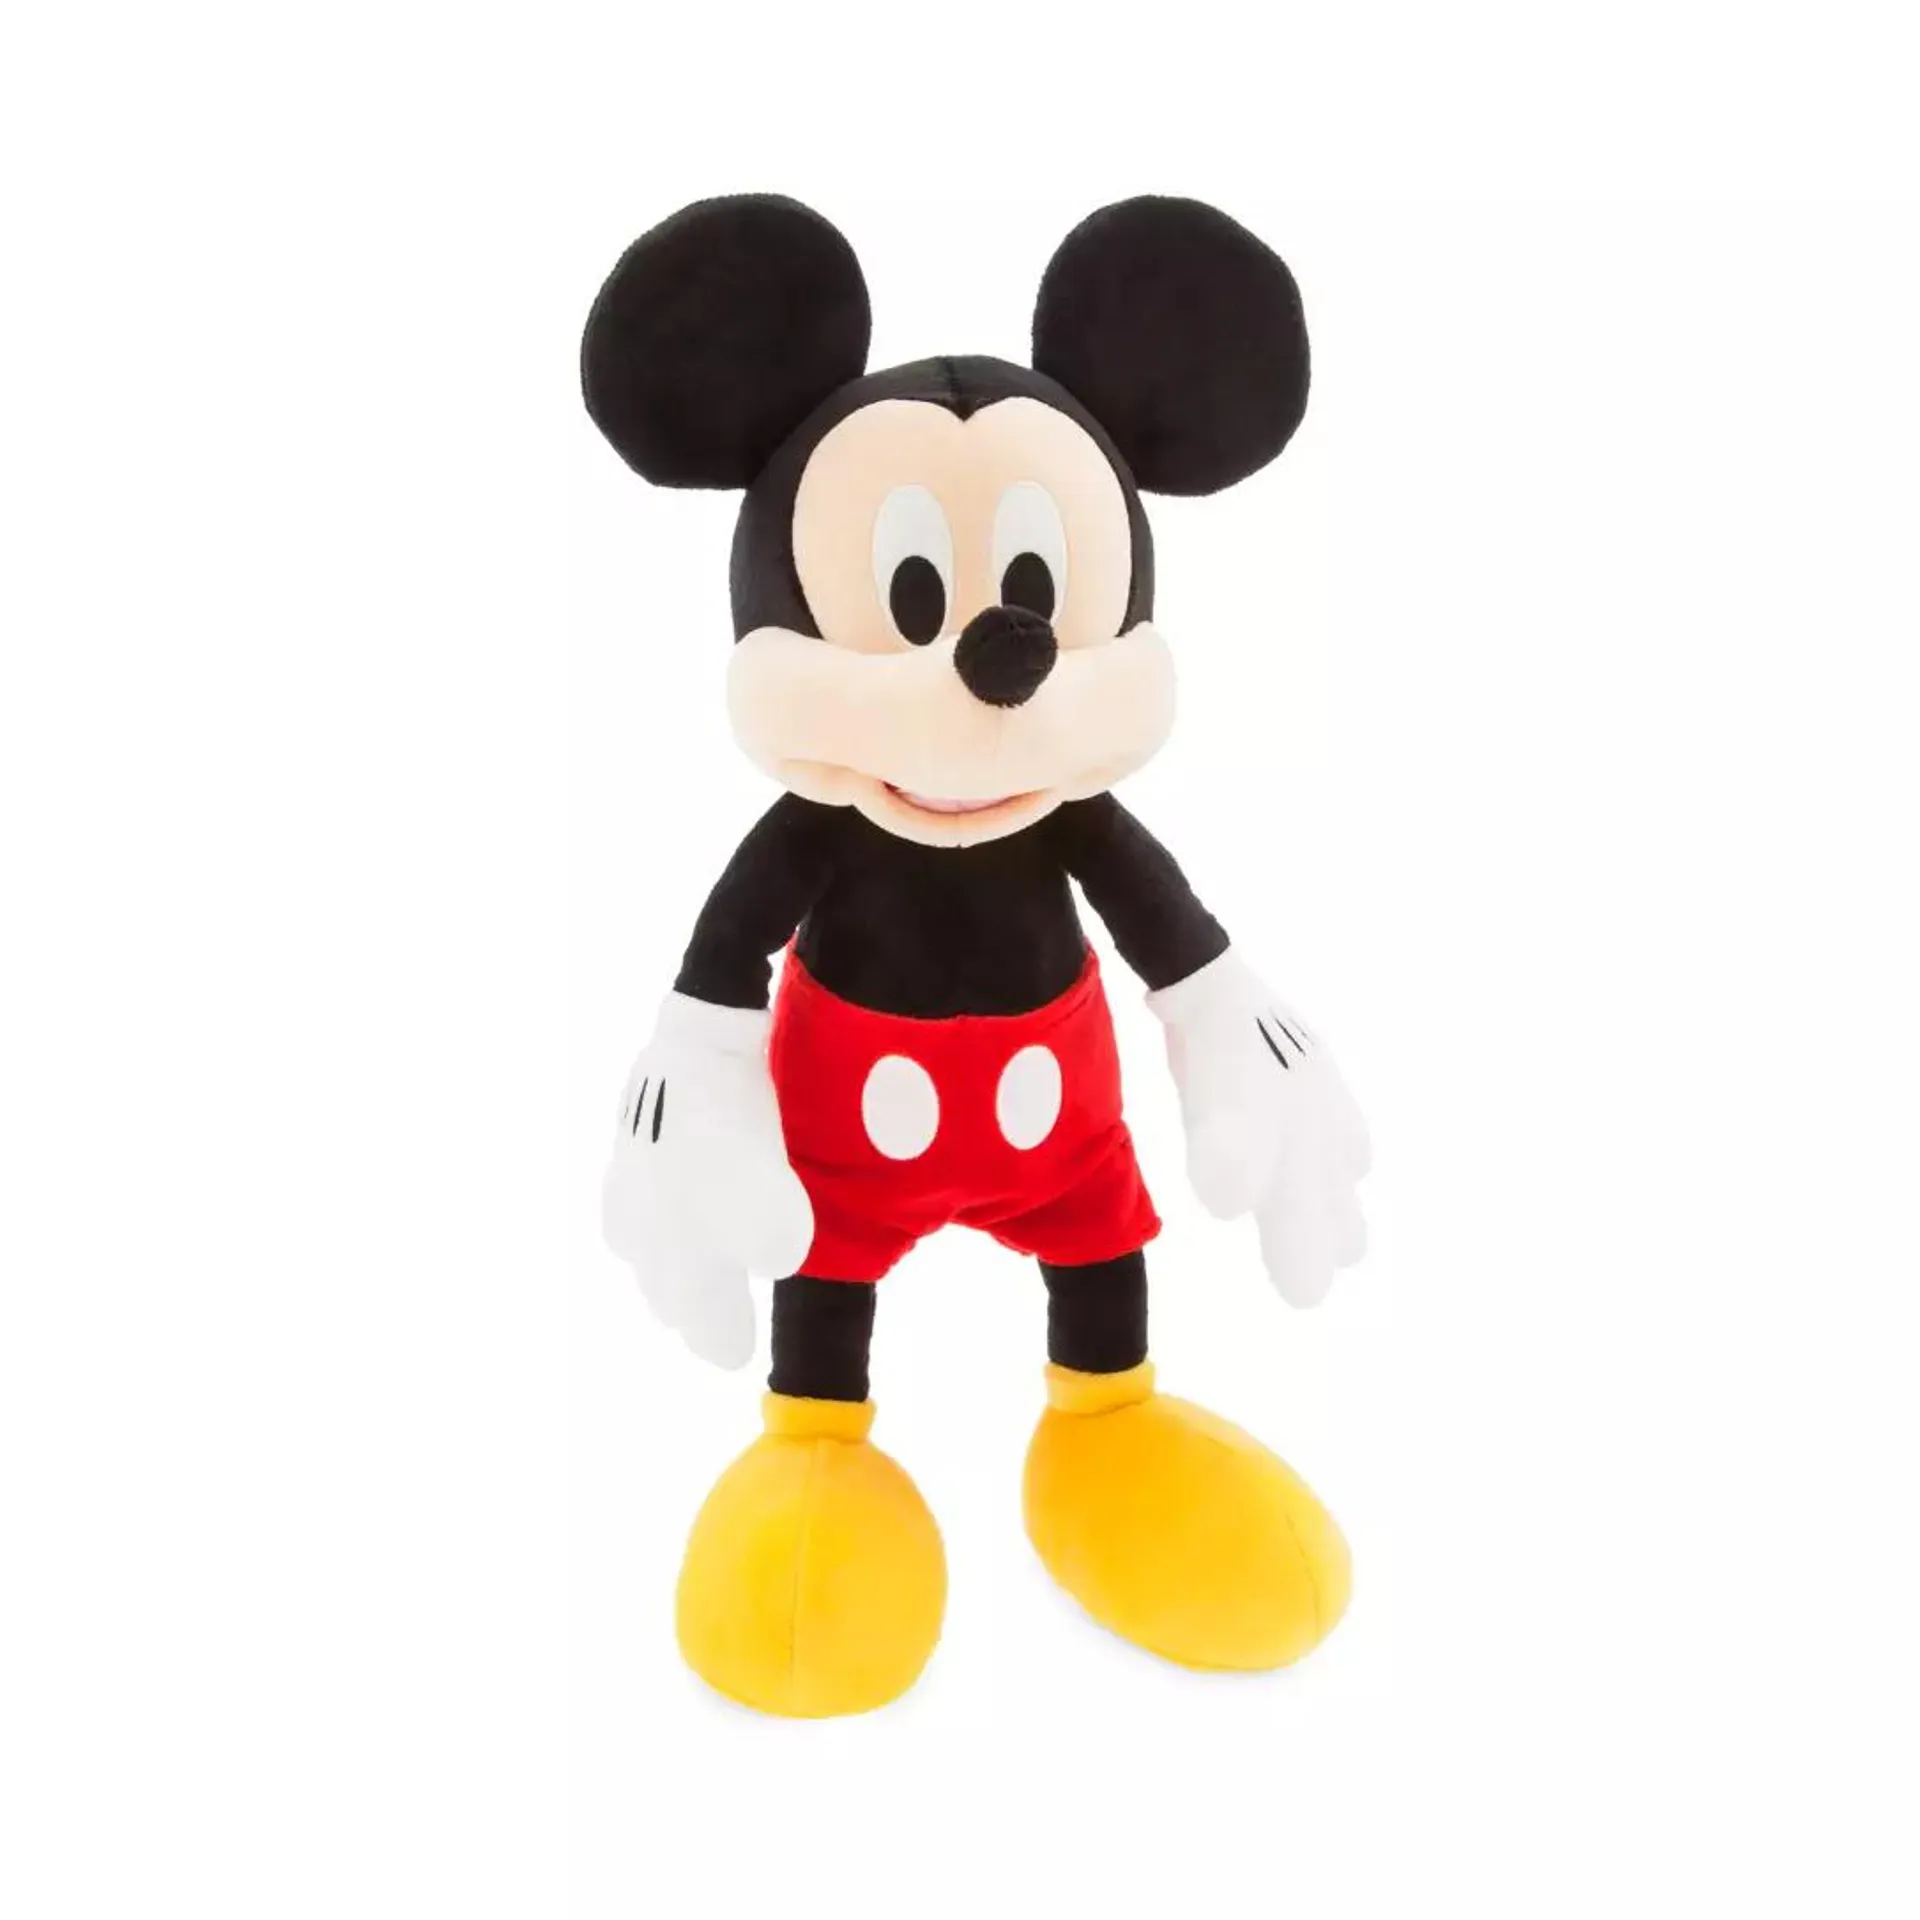 Disney Store Mickey Mouse Medium Soft Toy